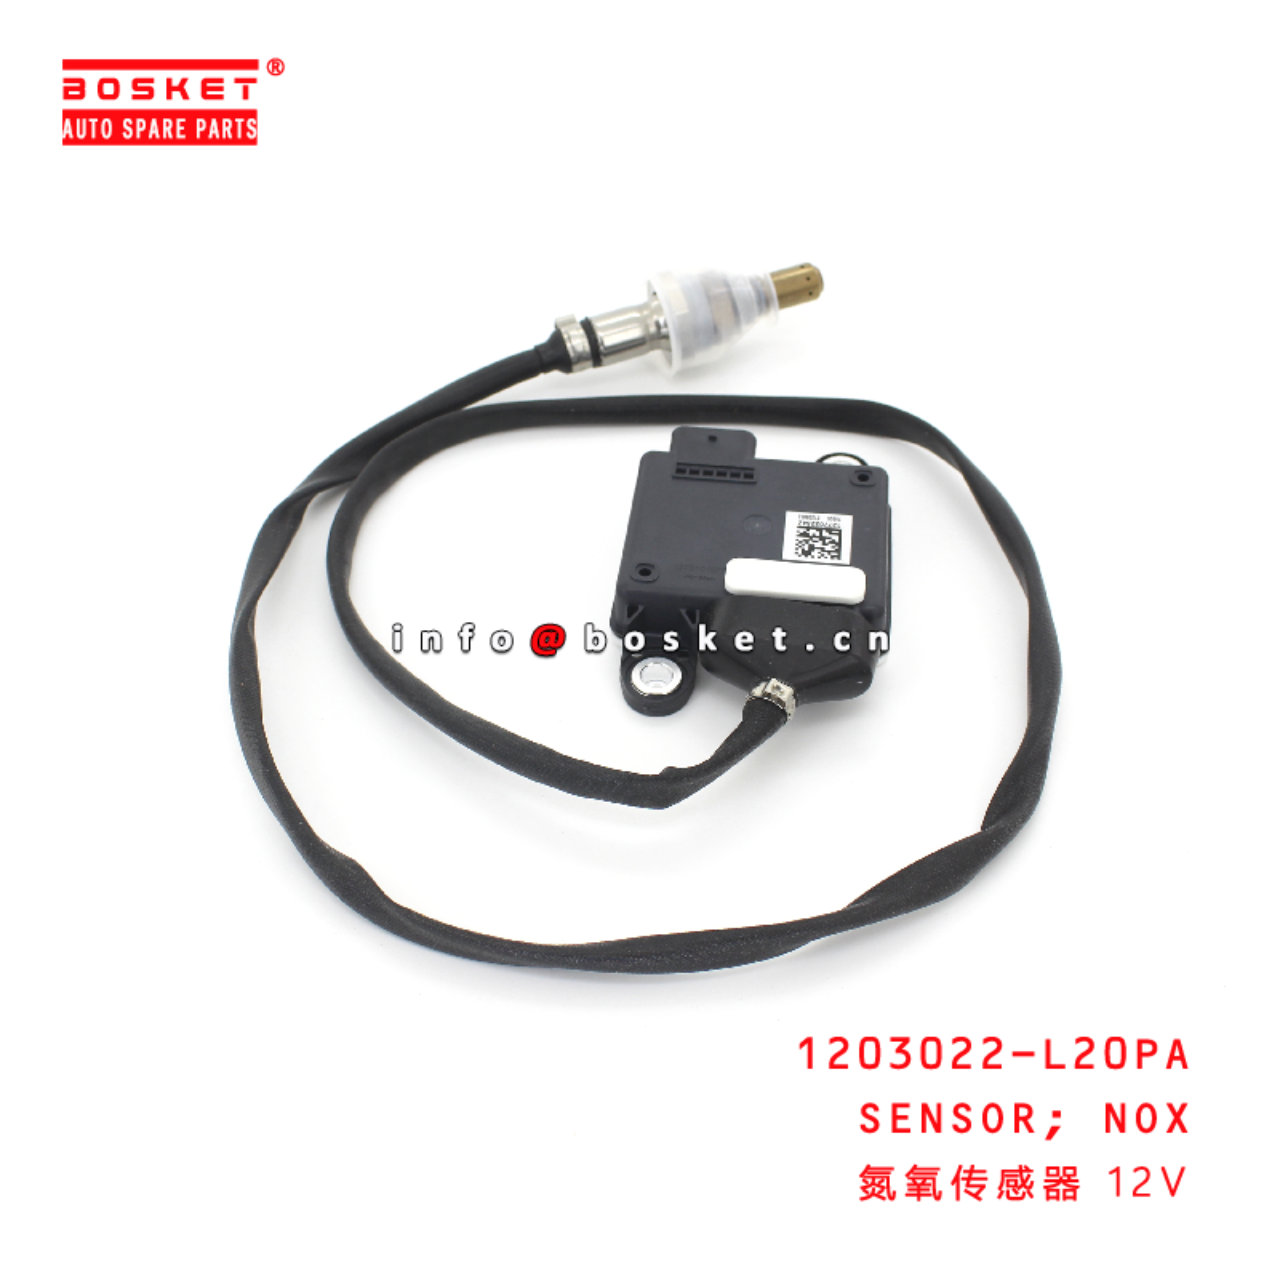 1203022-L20PA Nox Sensor suitable for JMC 1203022-L20PA